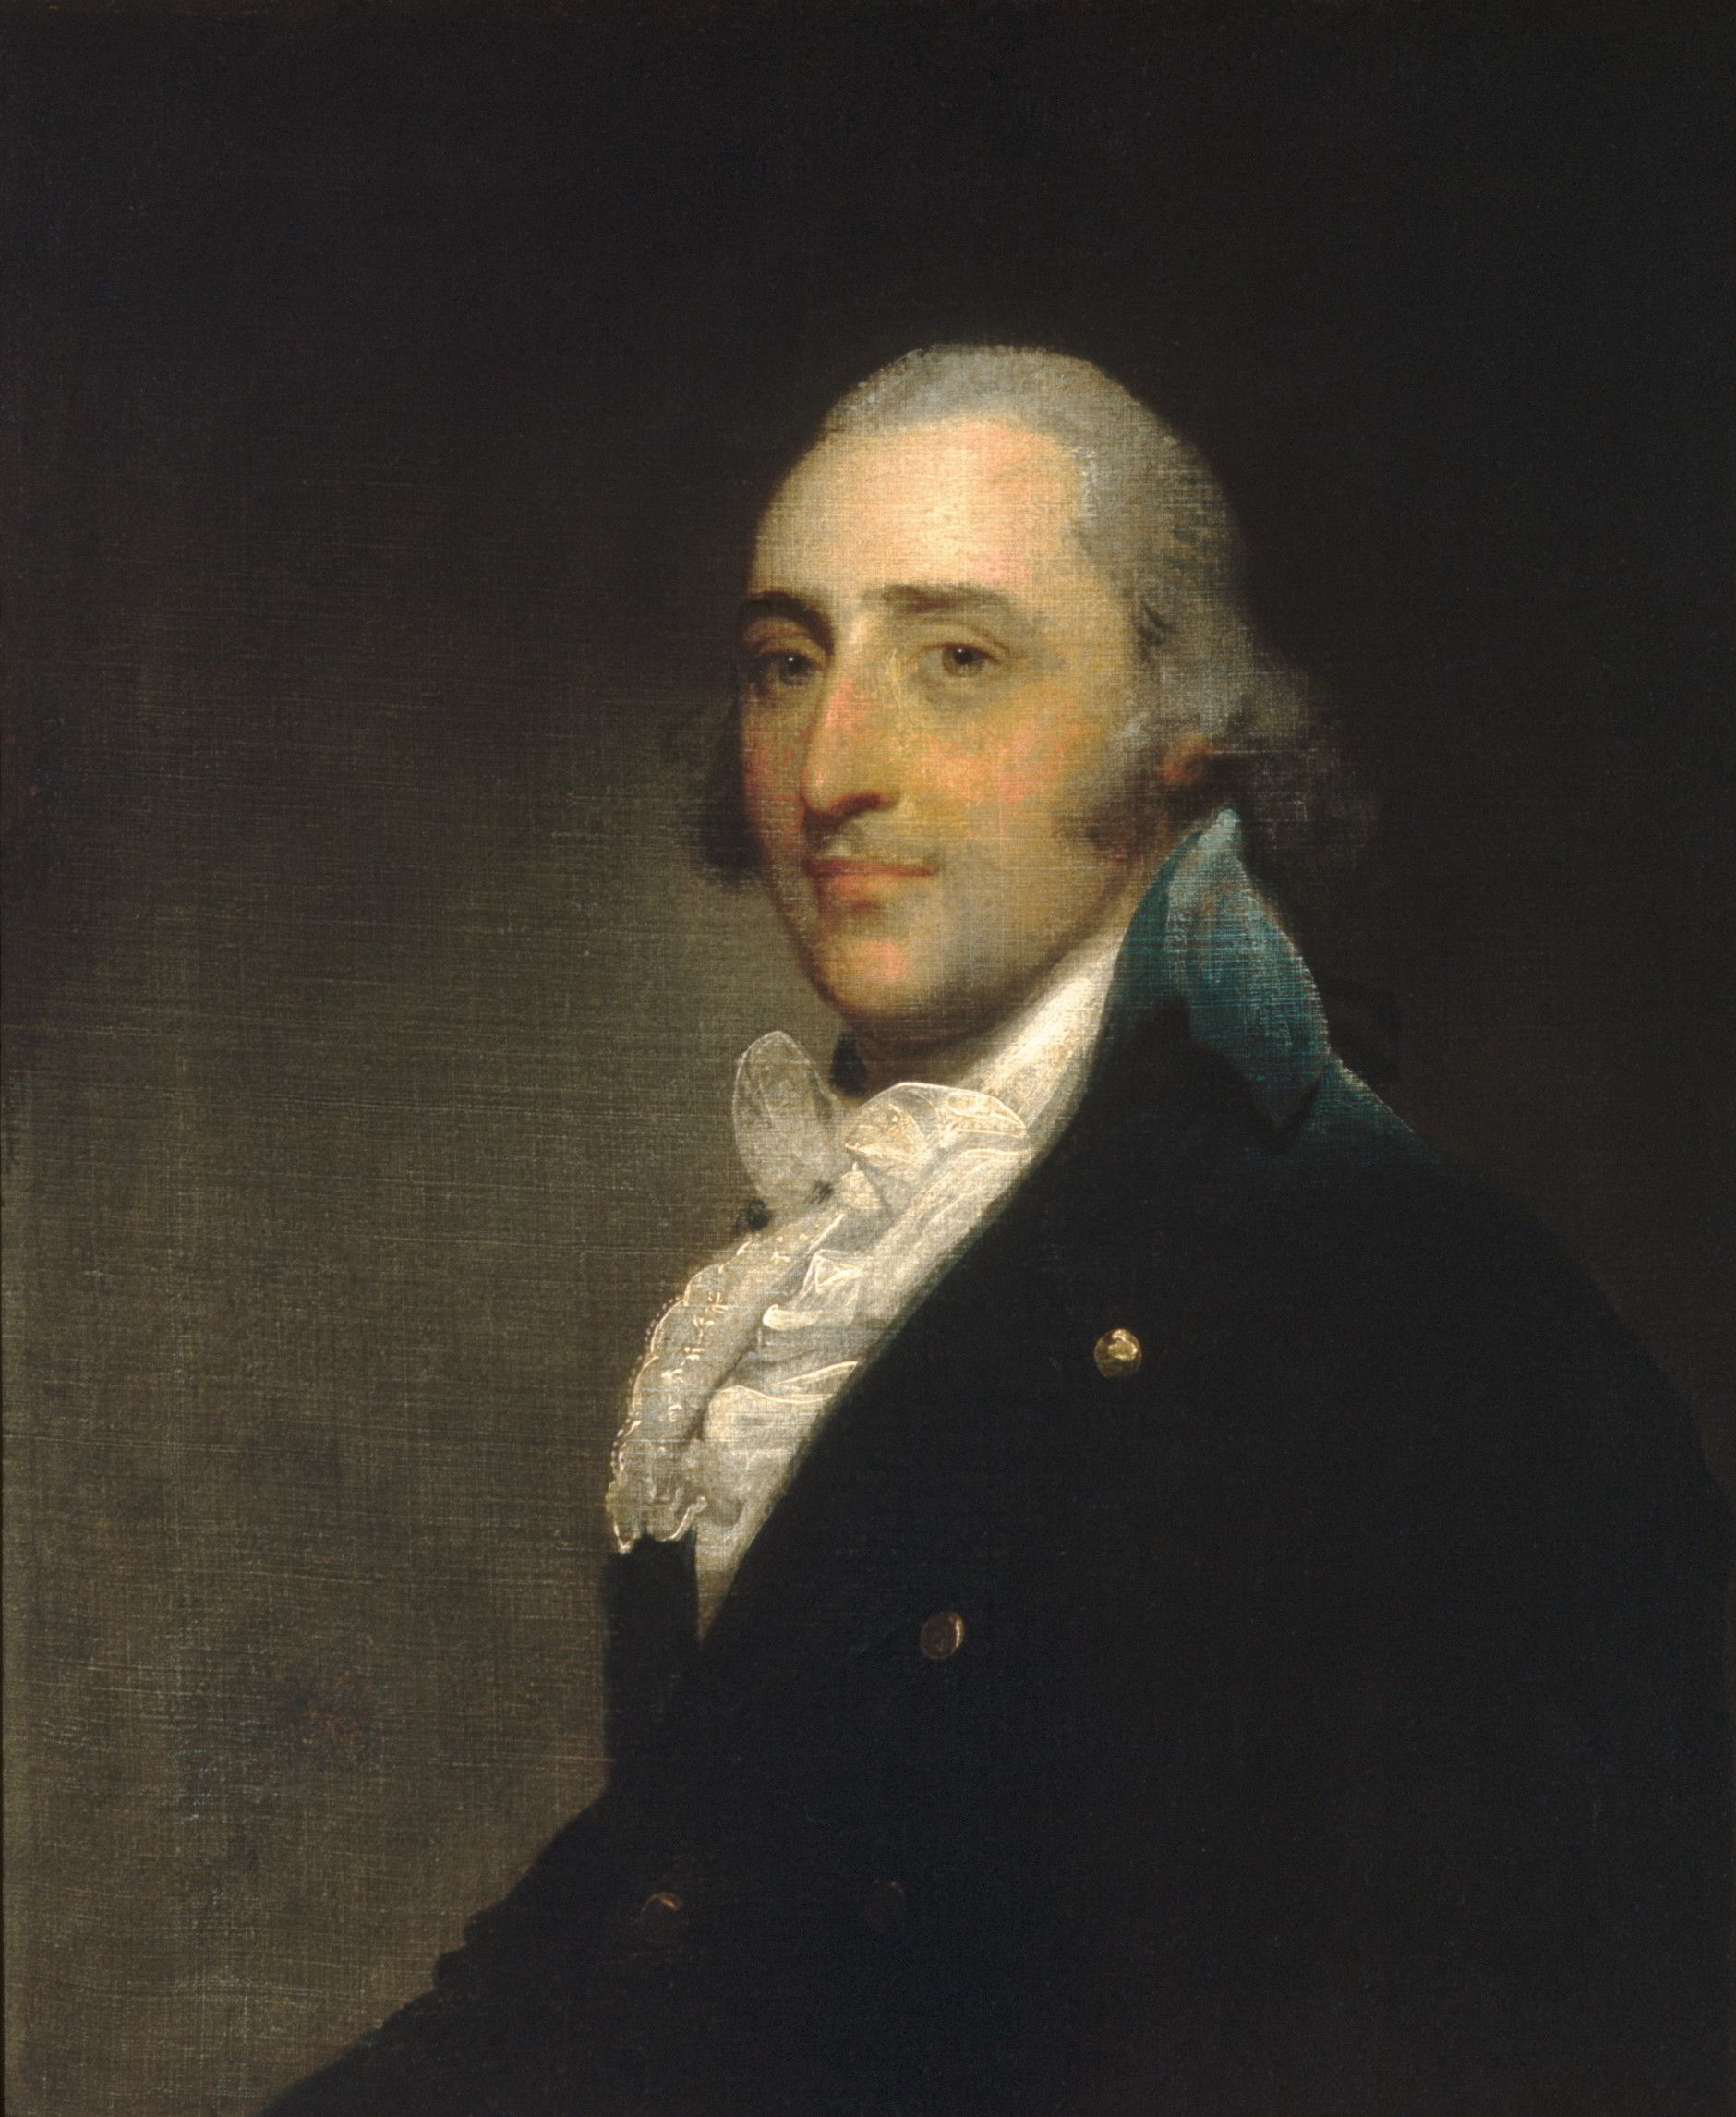 Charles Lee or Gentleman of the Lee Family by Gilbert Stuart-Gentleman Painting